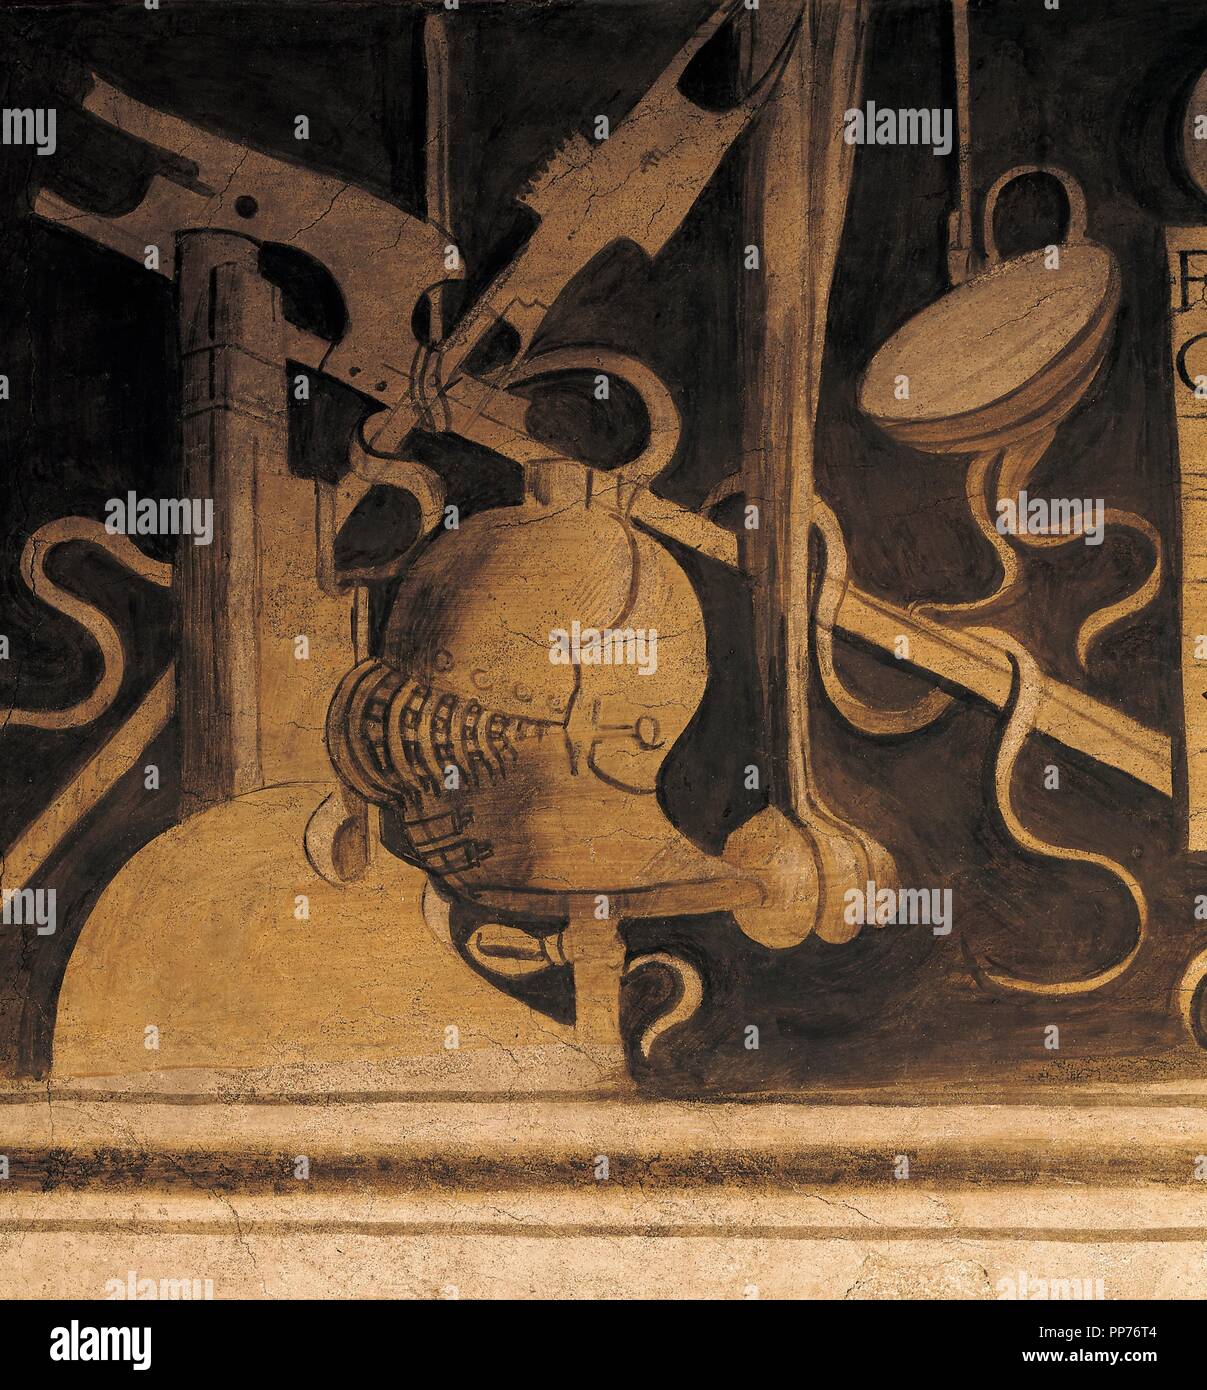 Instrumentos diversos: La Guerra. Museum: CASA PELLIZZARI CASTELFRAN ITALIA. Author: GIORGIONE, G. DA CASTELFRANCO. Stock Photo